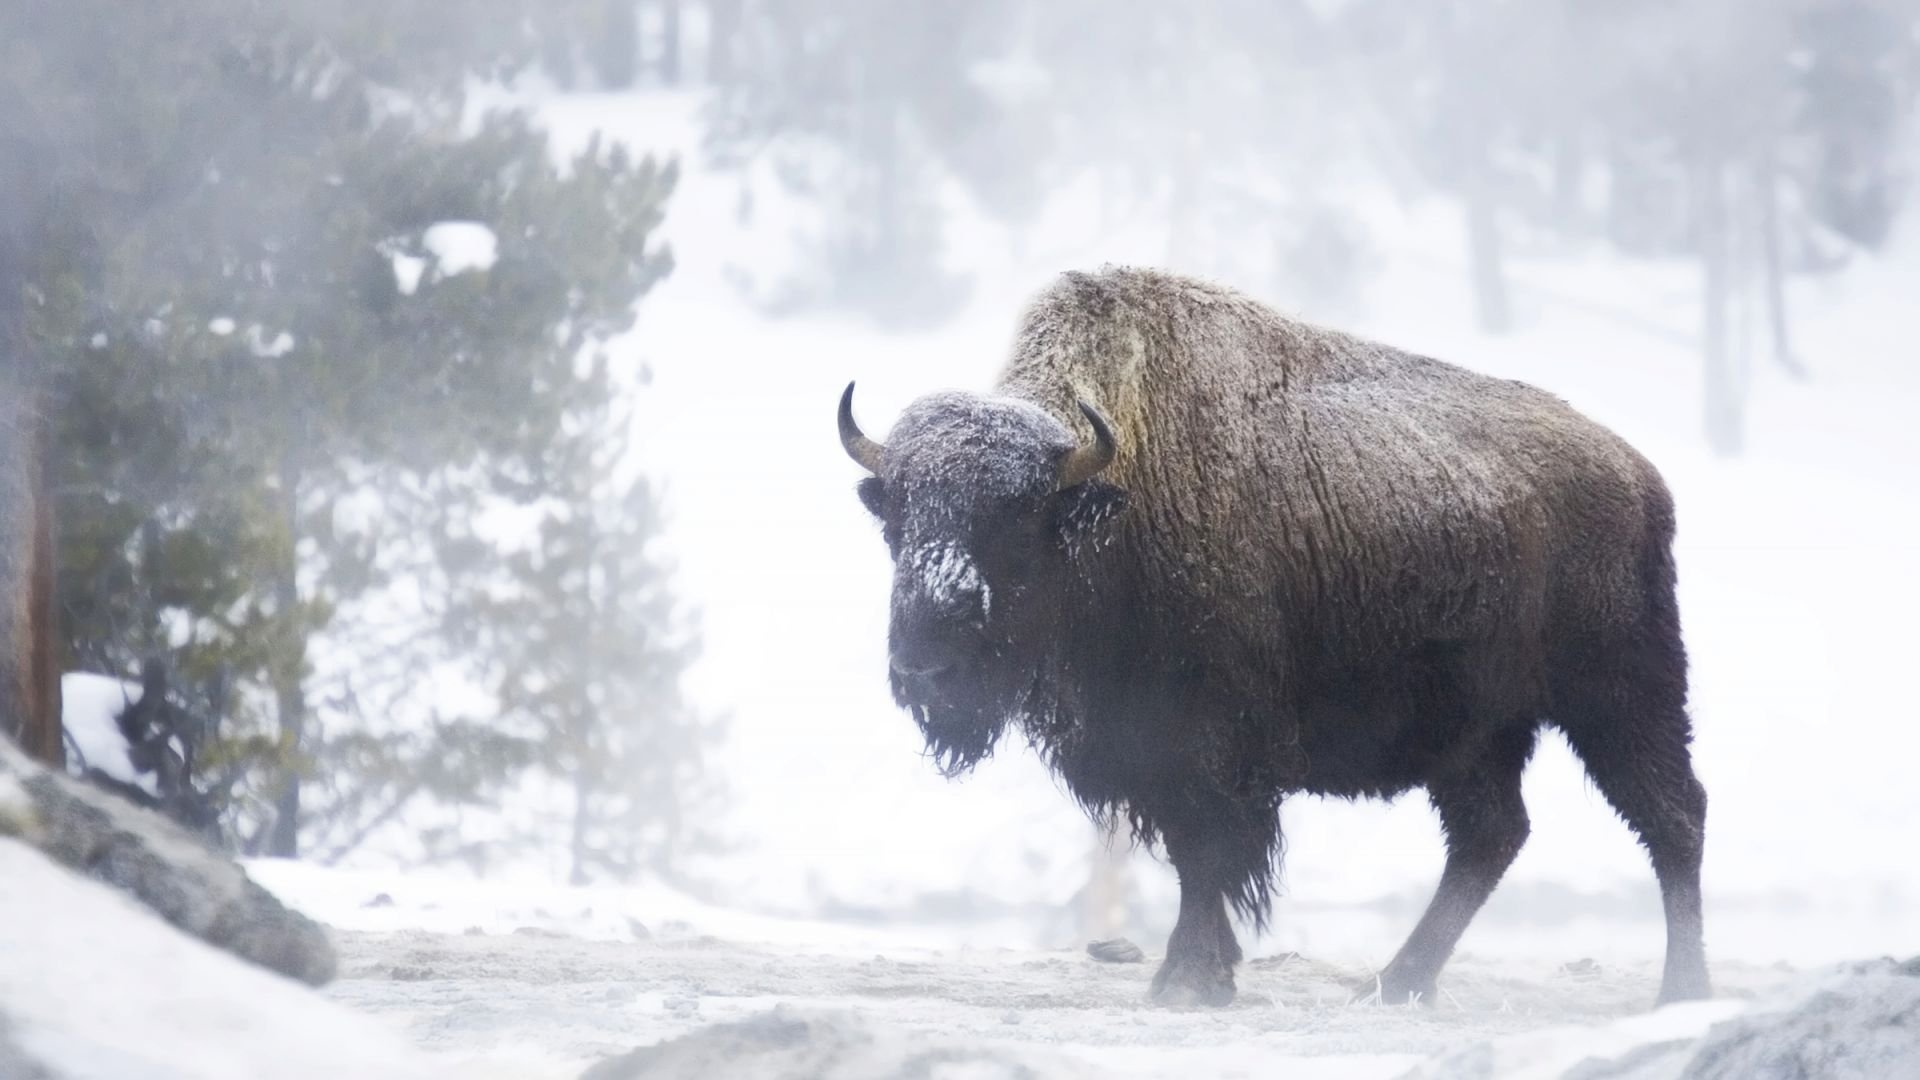 Bison in winter, Winter-themed buffalo wallpaper, Mesmerizing bison image, Snow-covered buffalo, 1920x1080 Full HD Desktop